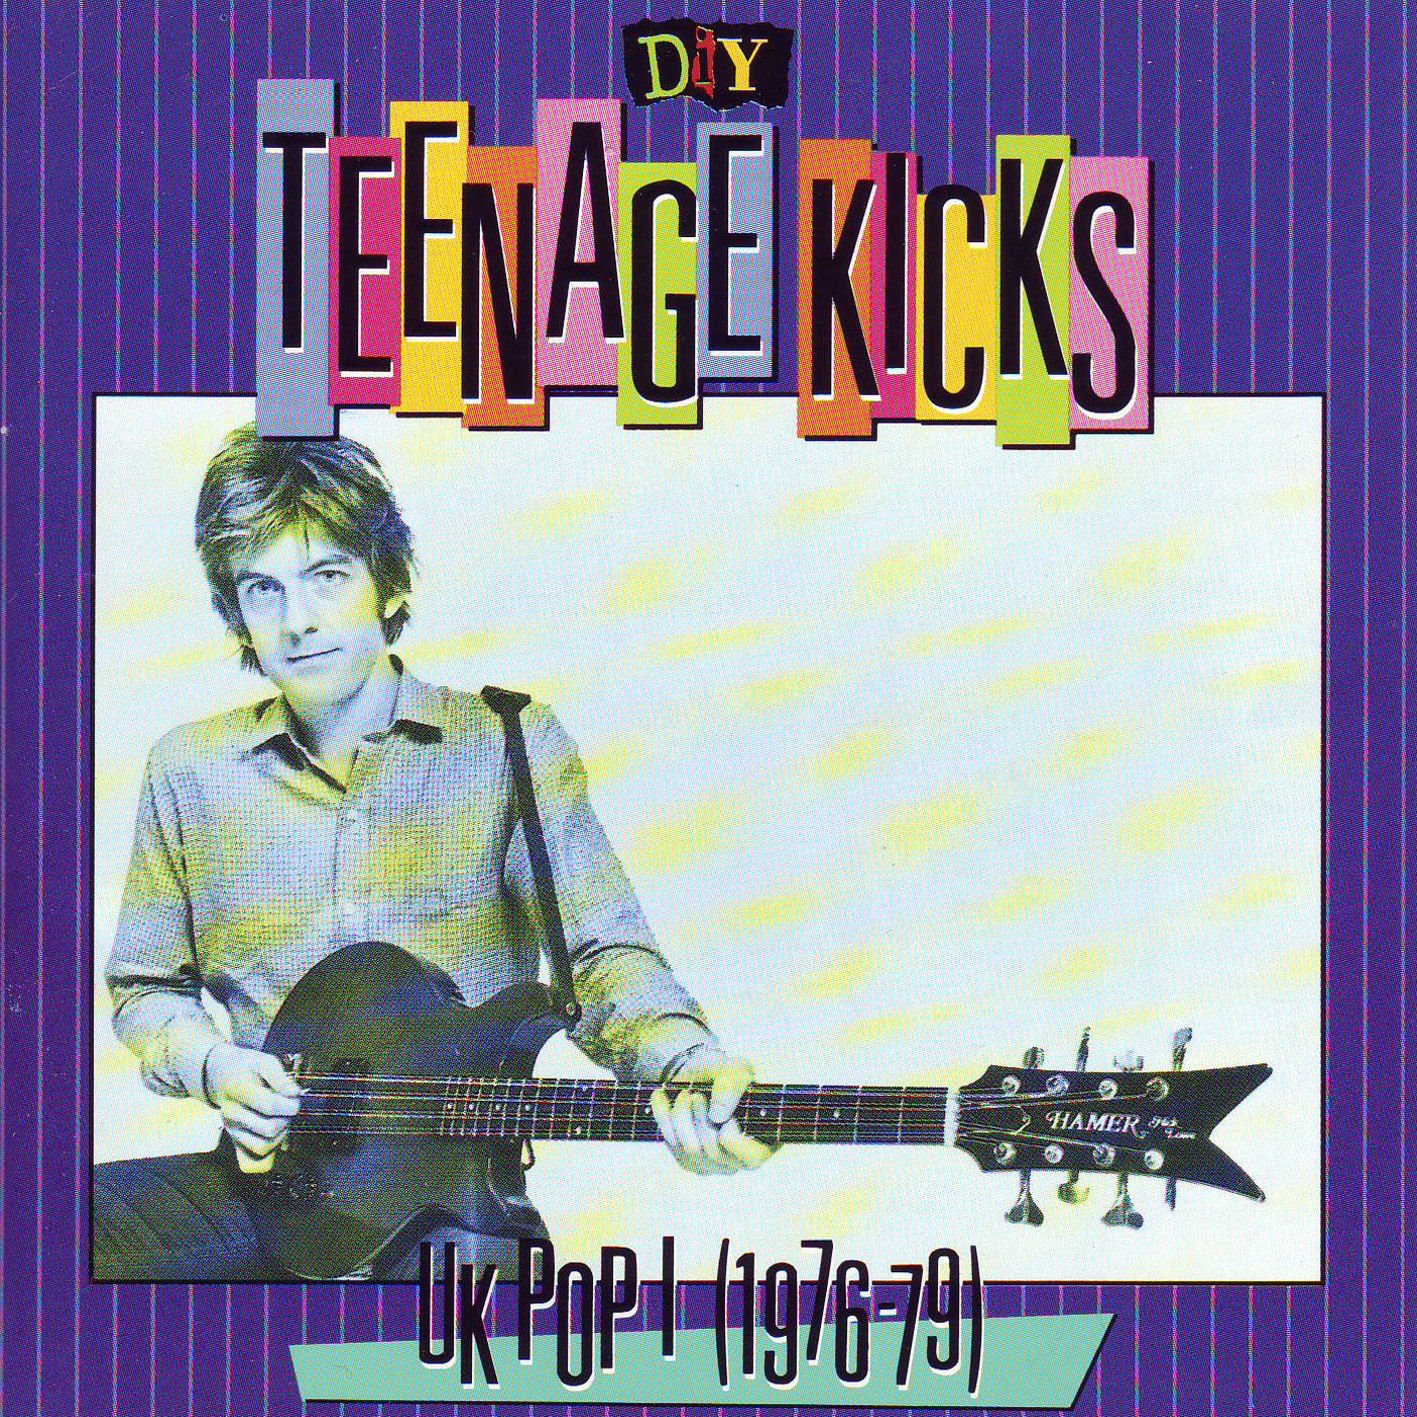 [Teenage+Kicks+-UK+Pop+I+(1976-1979)+-+Front.jpg]